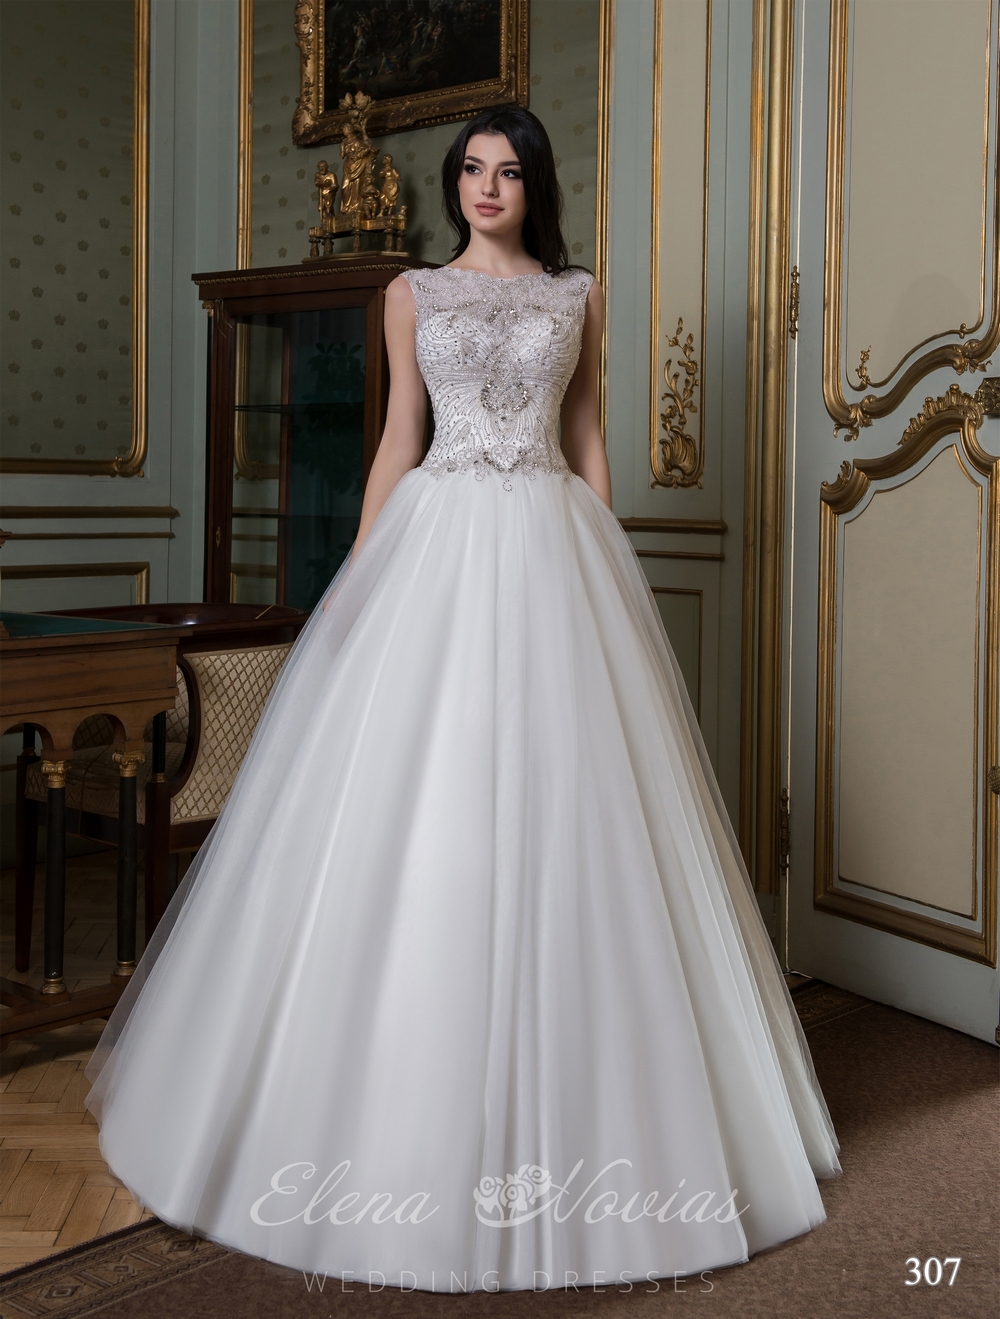 Luccicante Bridal - Designer Wedding Dress - Bridal Boutique HK